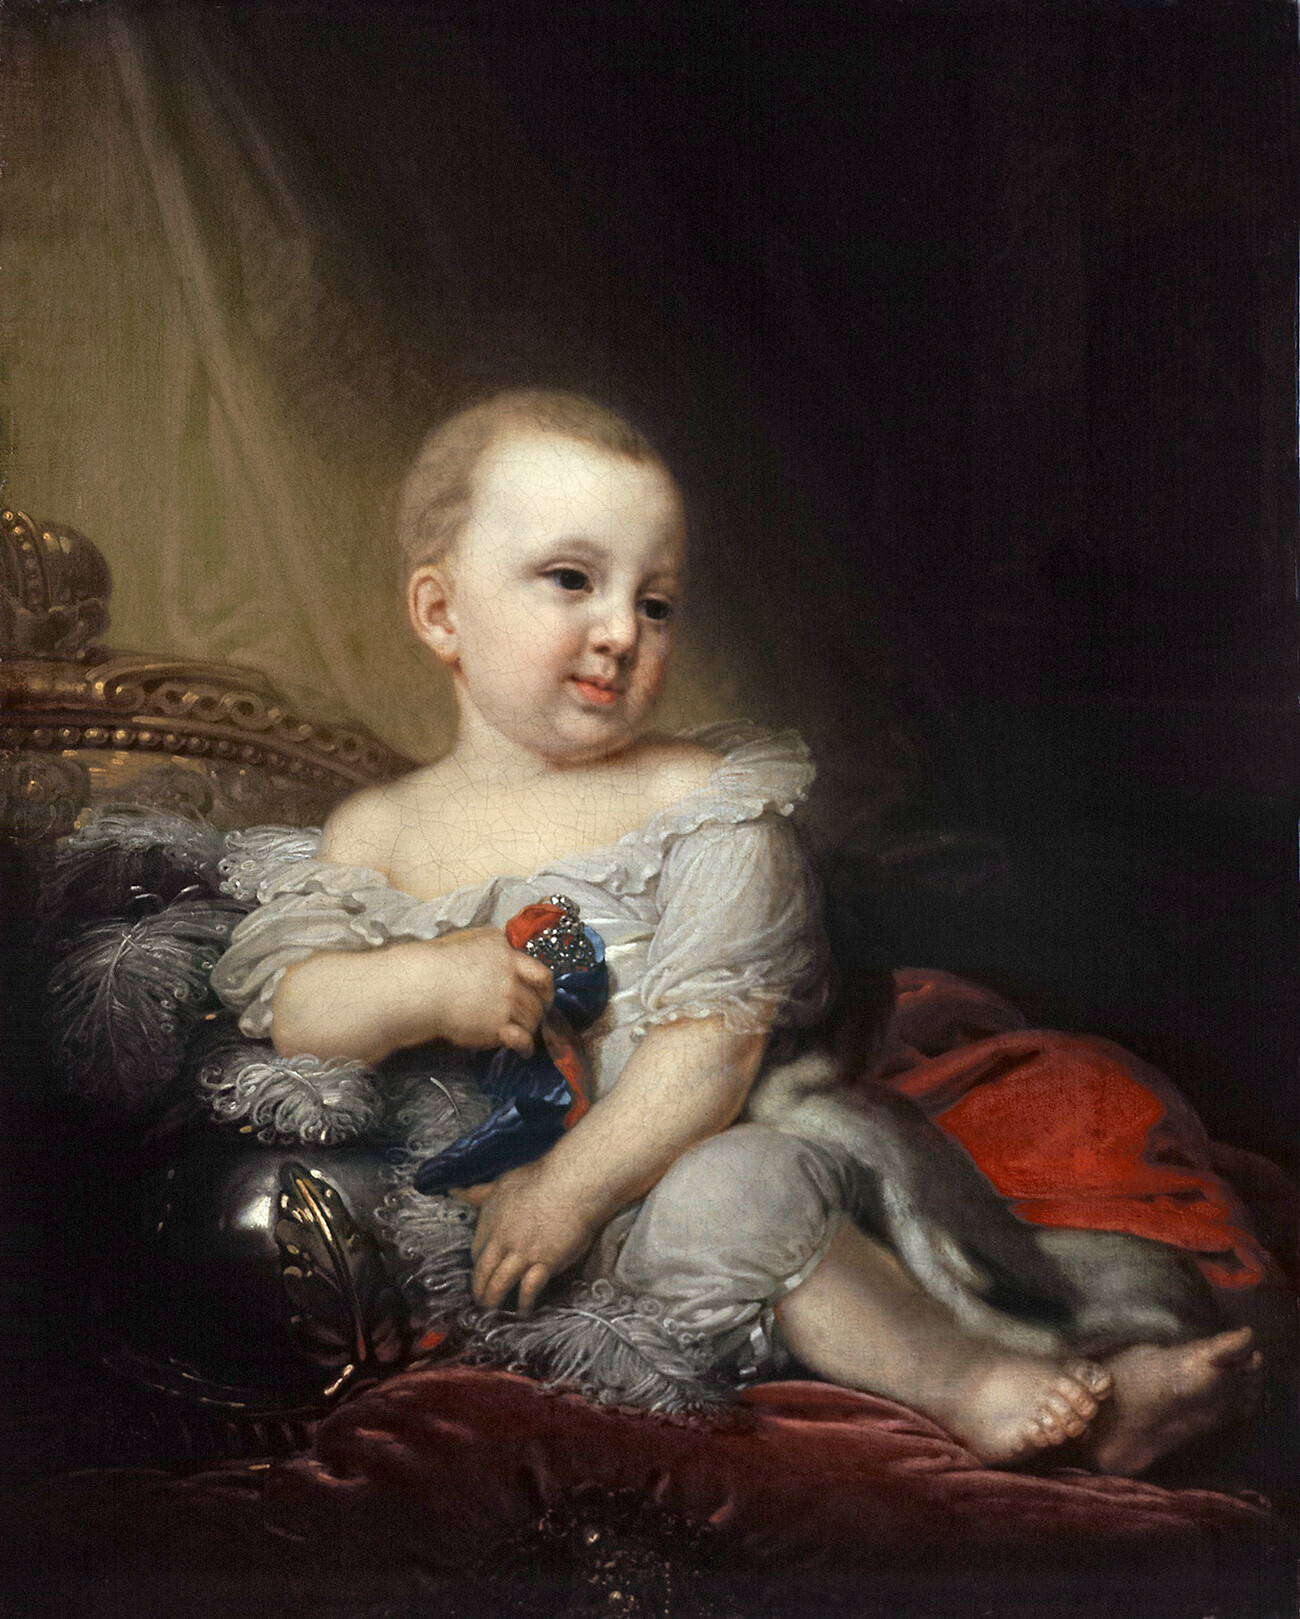 Nicolau 1º da Rússia quando criança, 1797. Vladímir Borovikôvski.